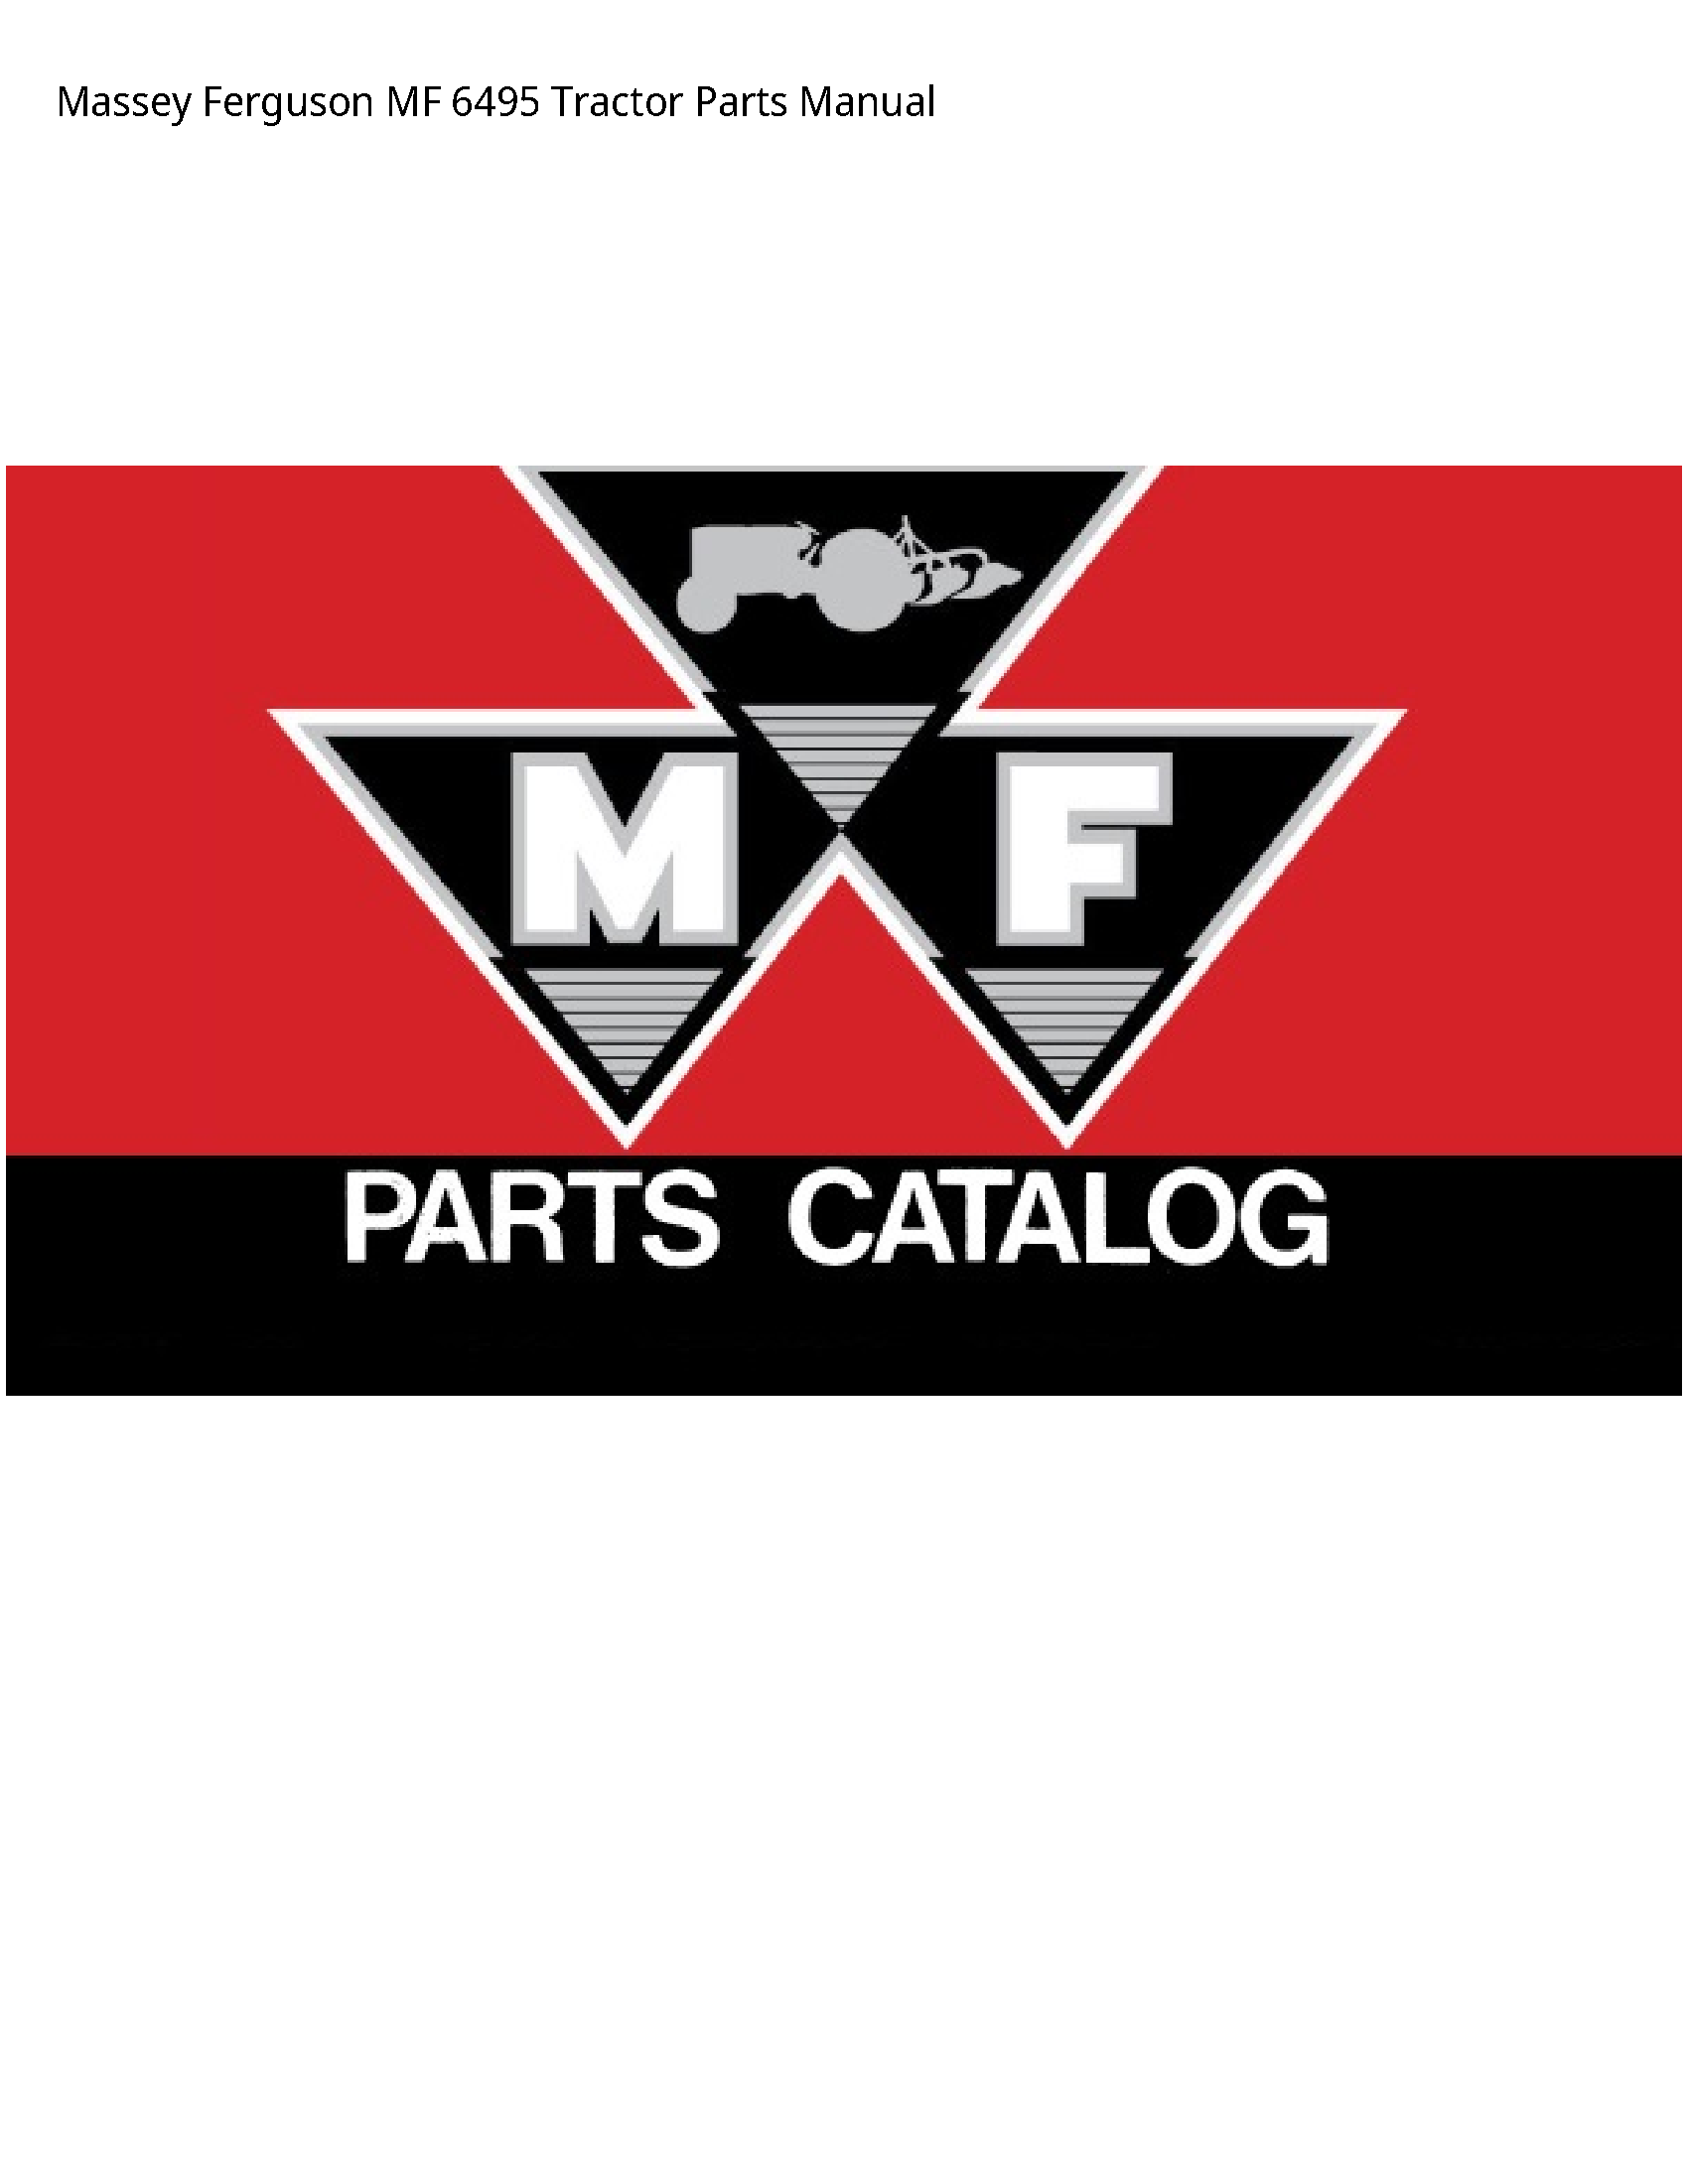 Massey Ferguson 6495 MF Tractor Parts manual